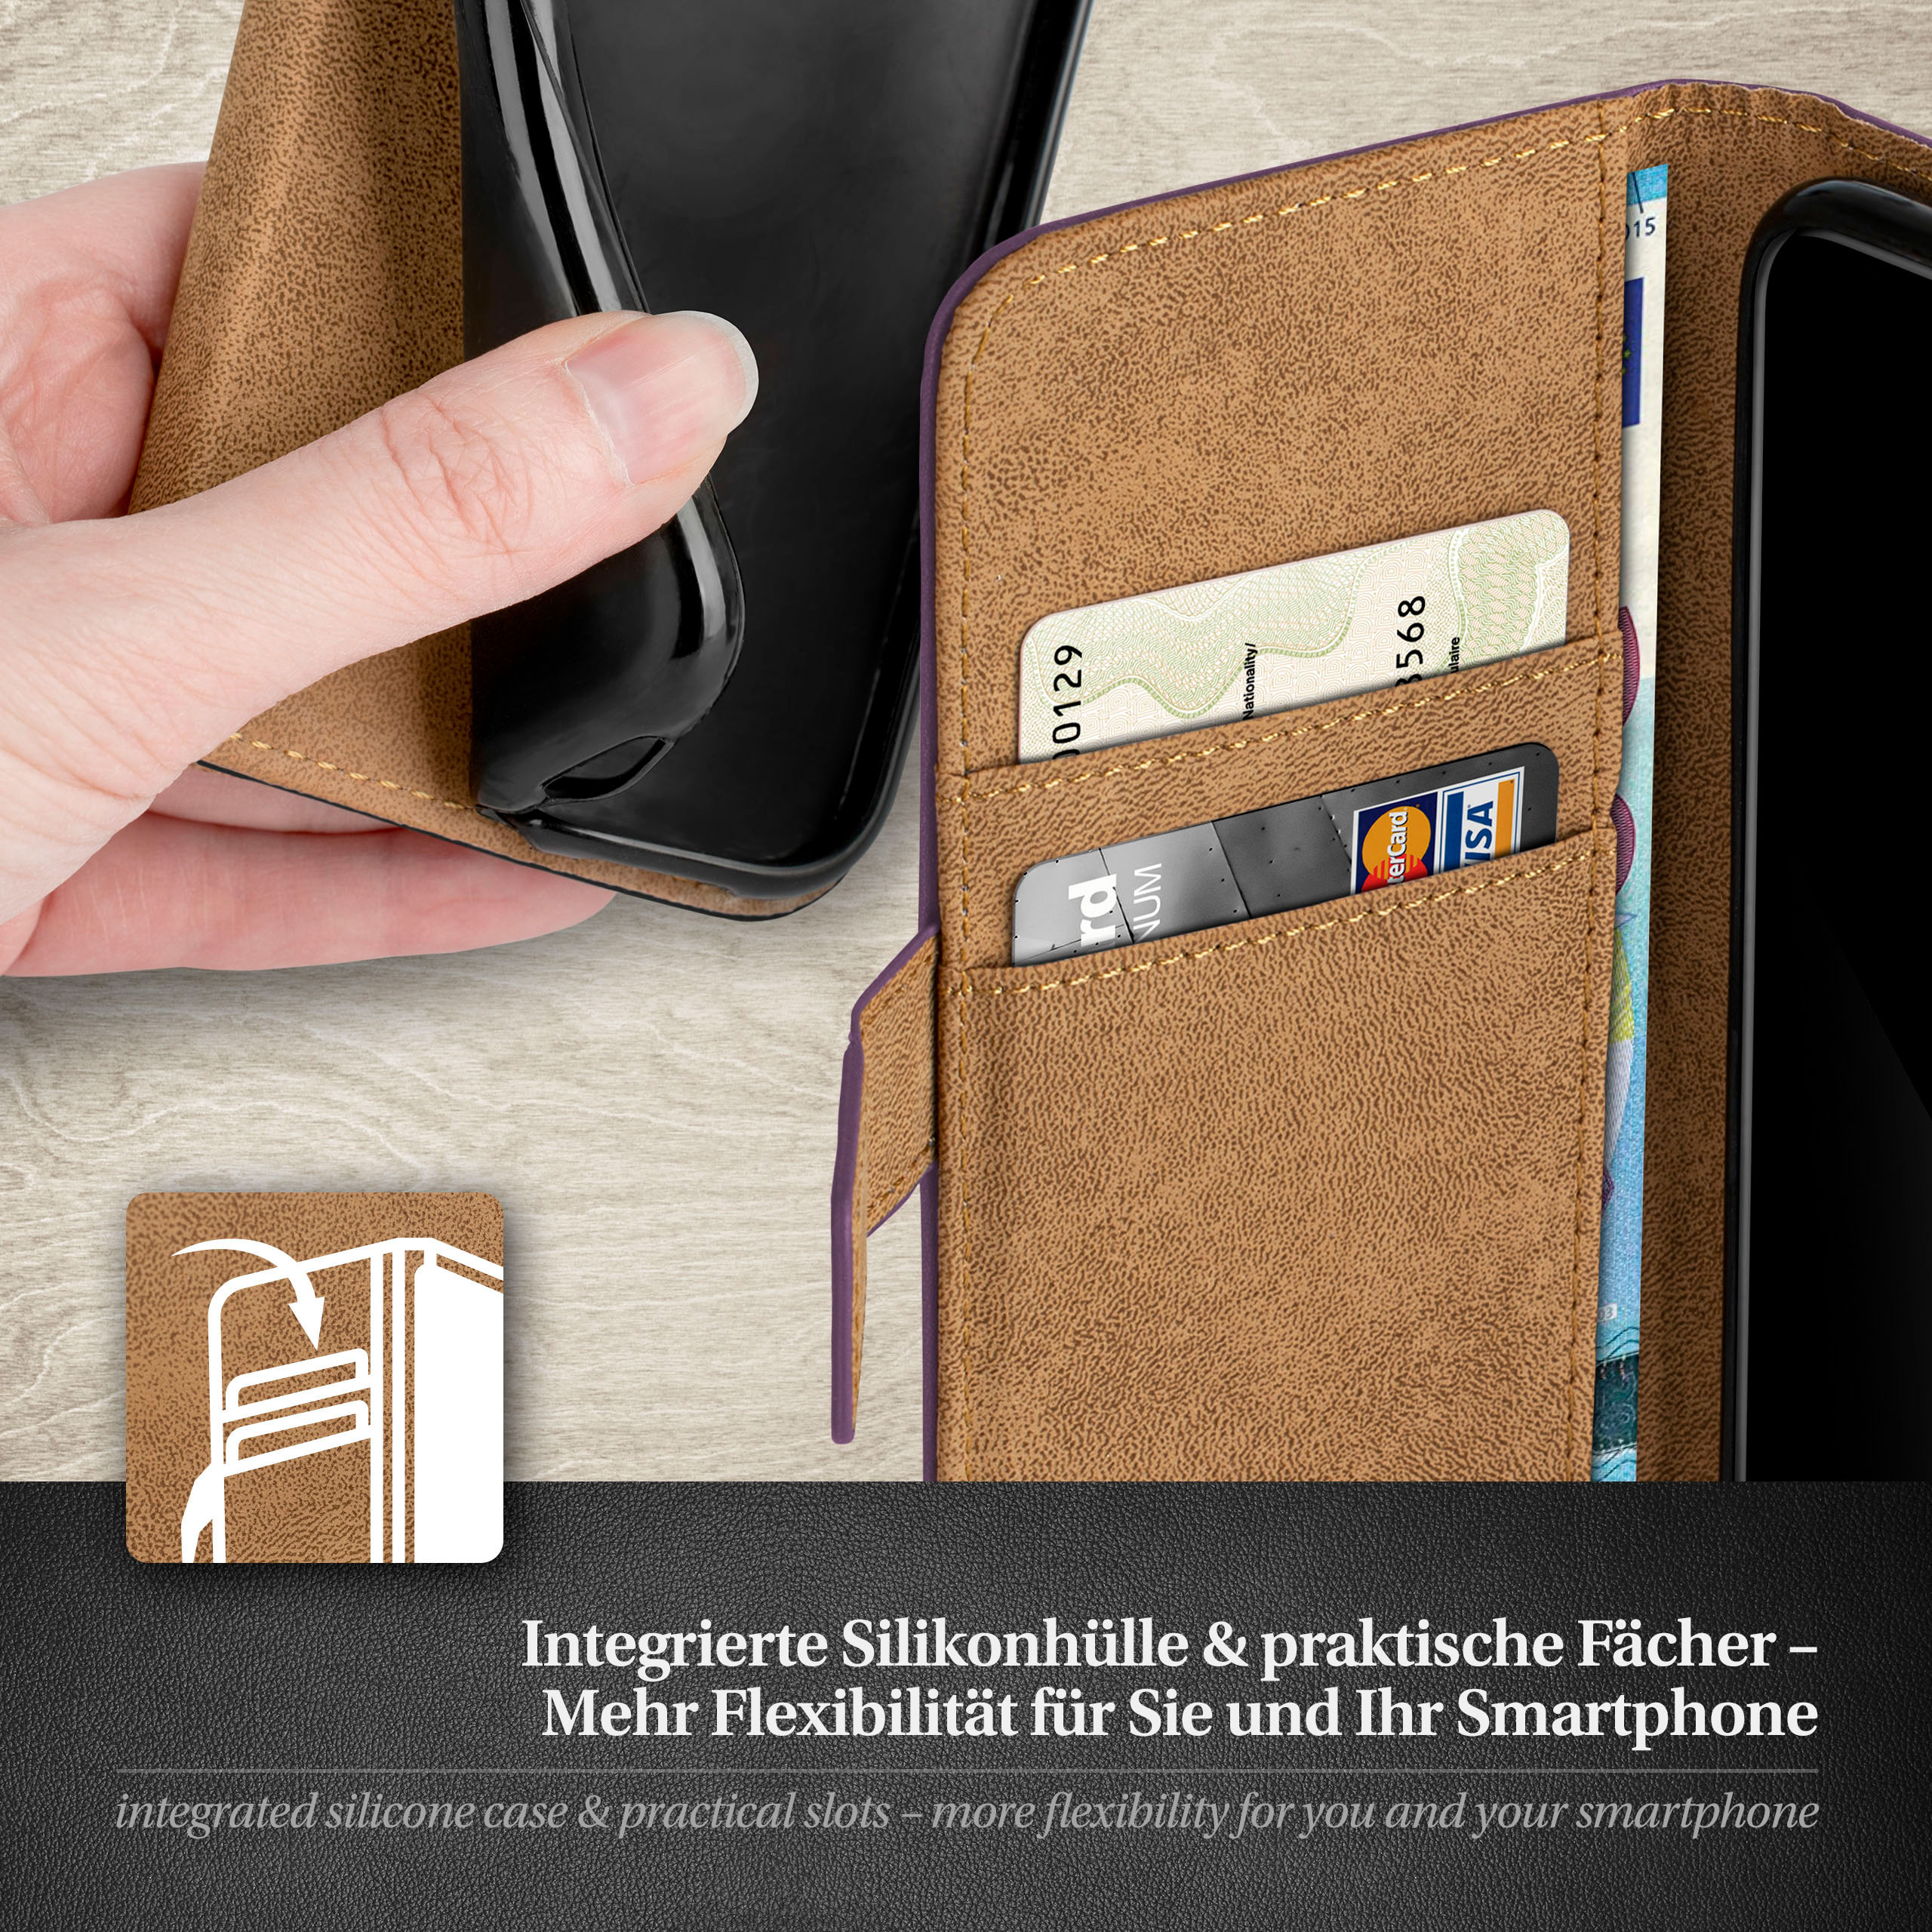 Book Plus, Case, Galaxy Indigo-Violet S8 Samsung, Bookcover, MOEX